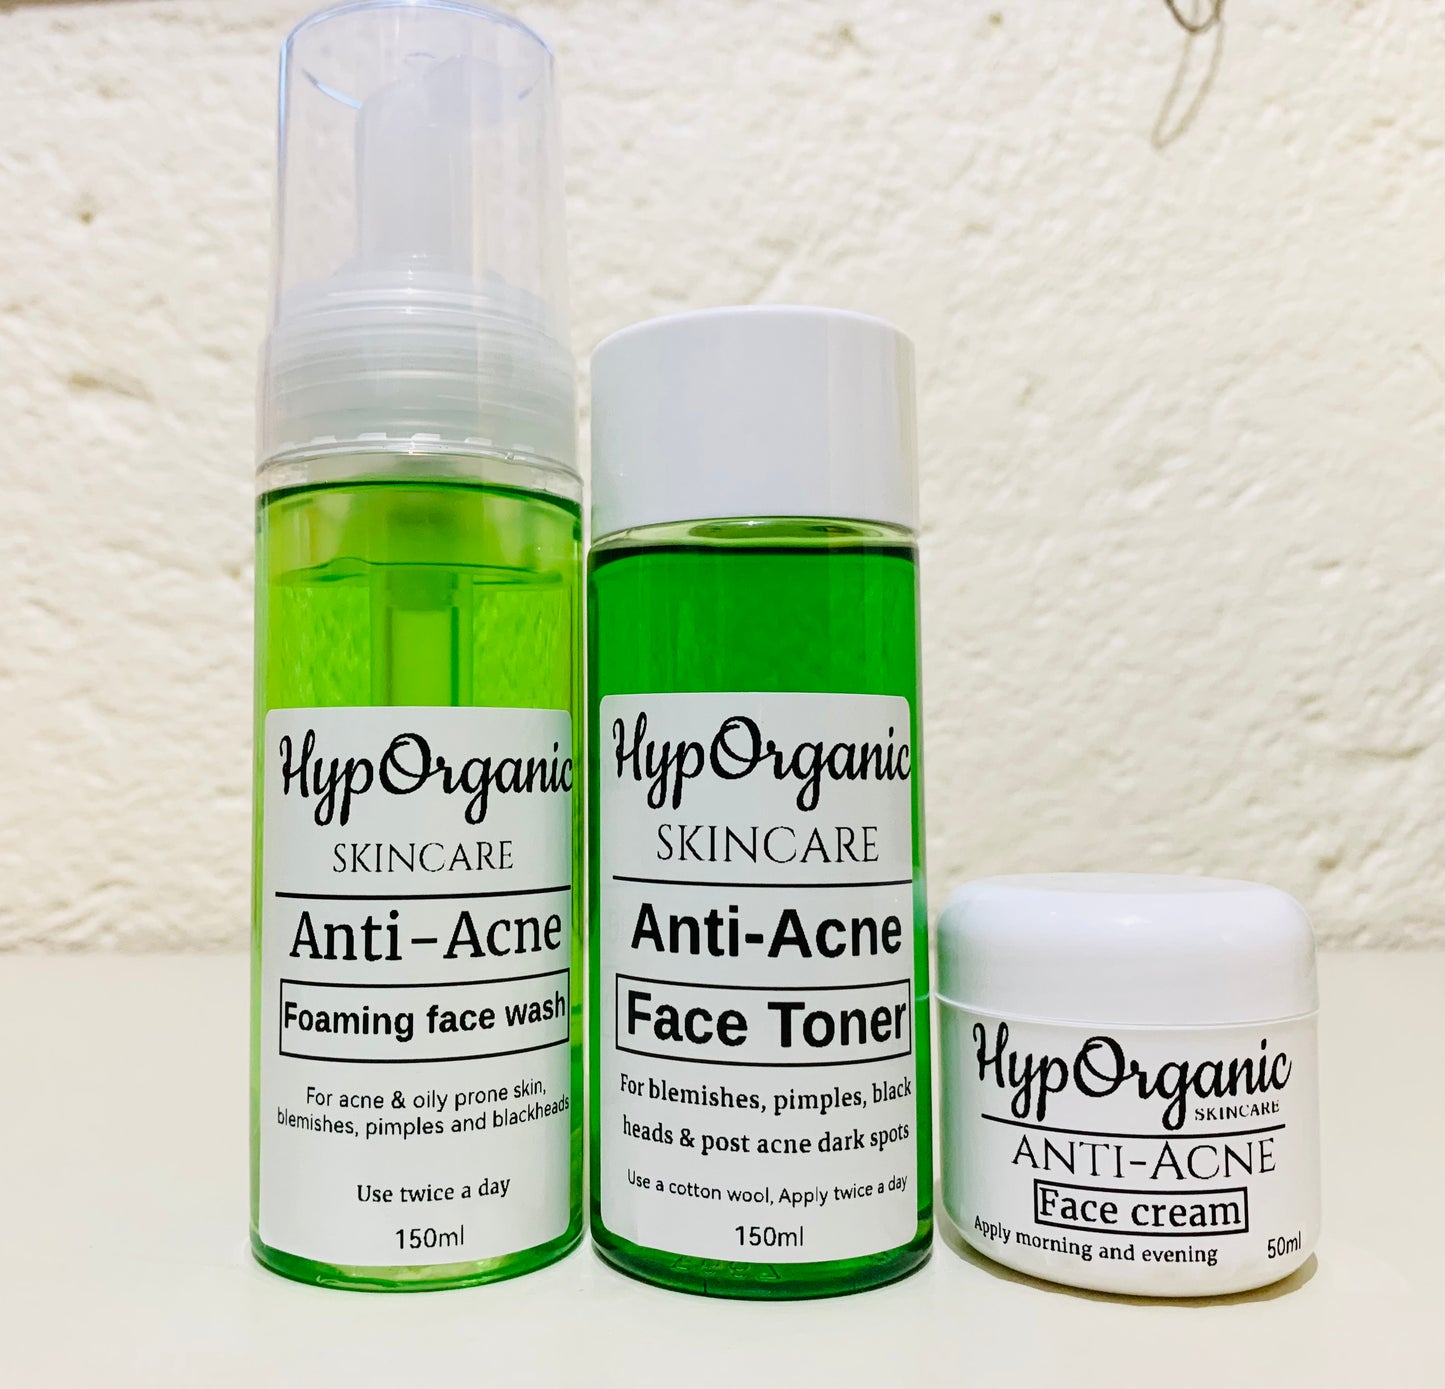 Anti-acne face kit